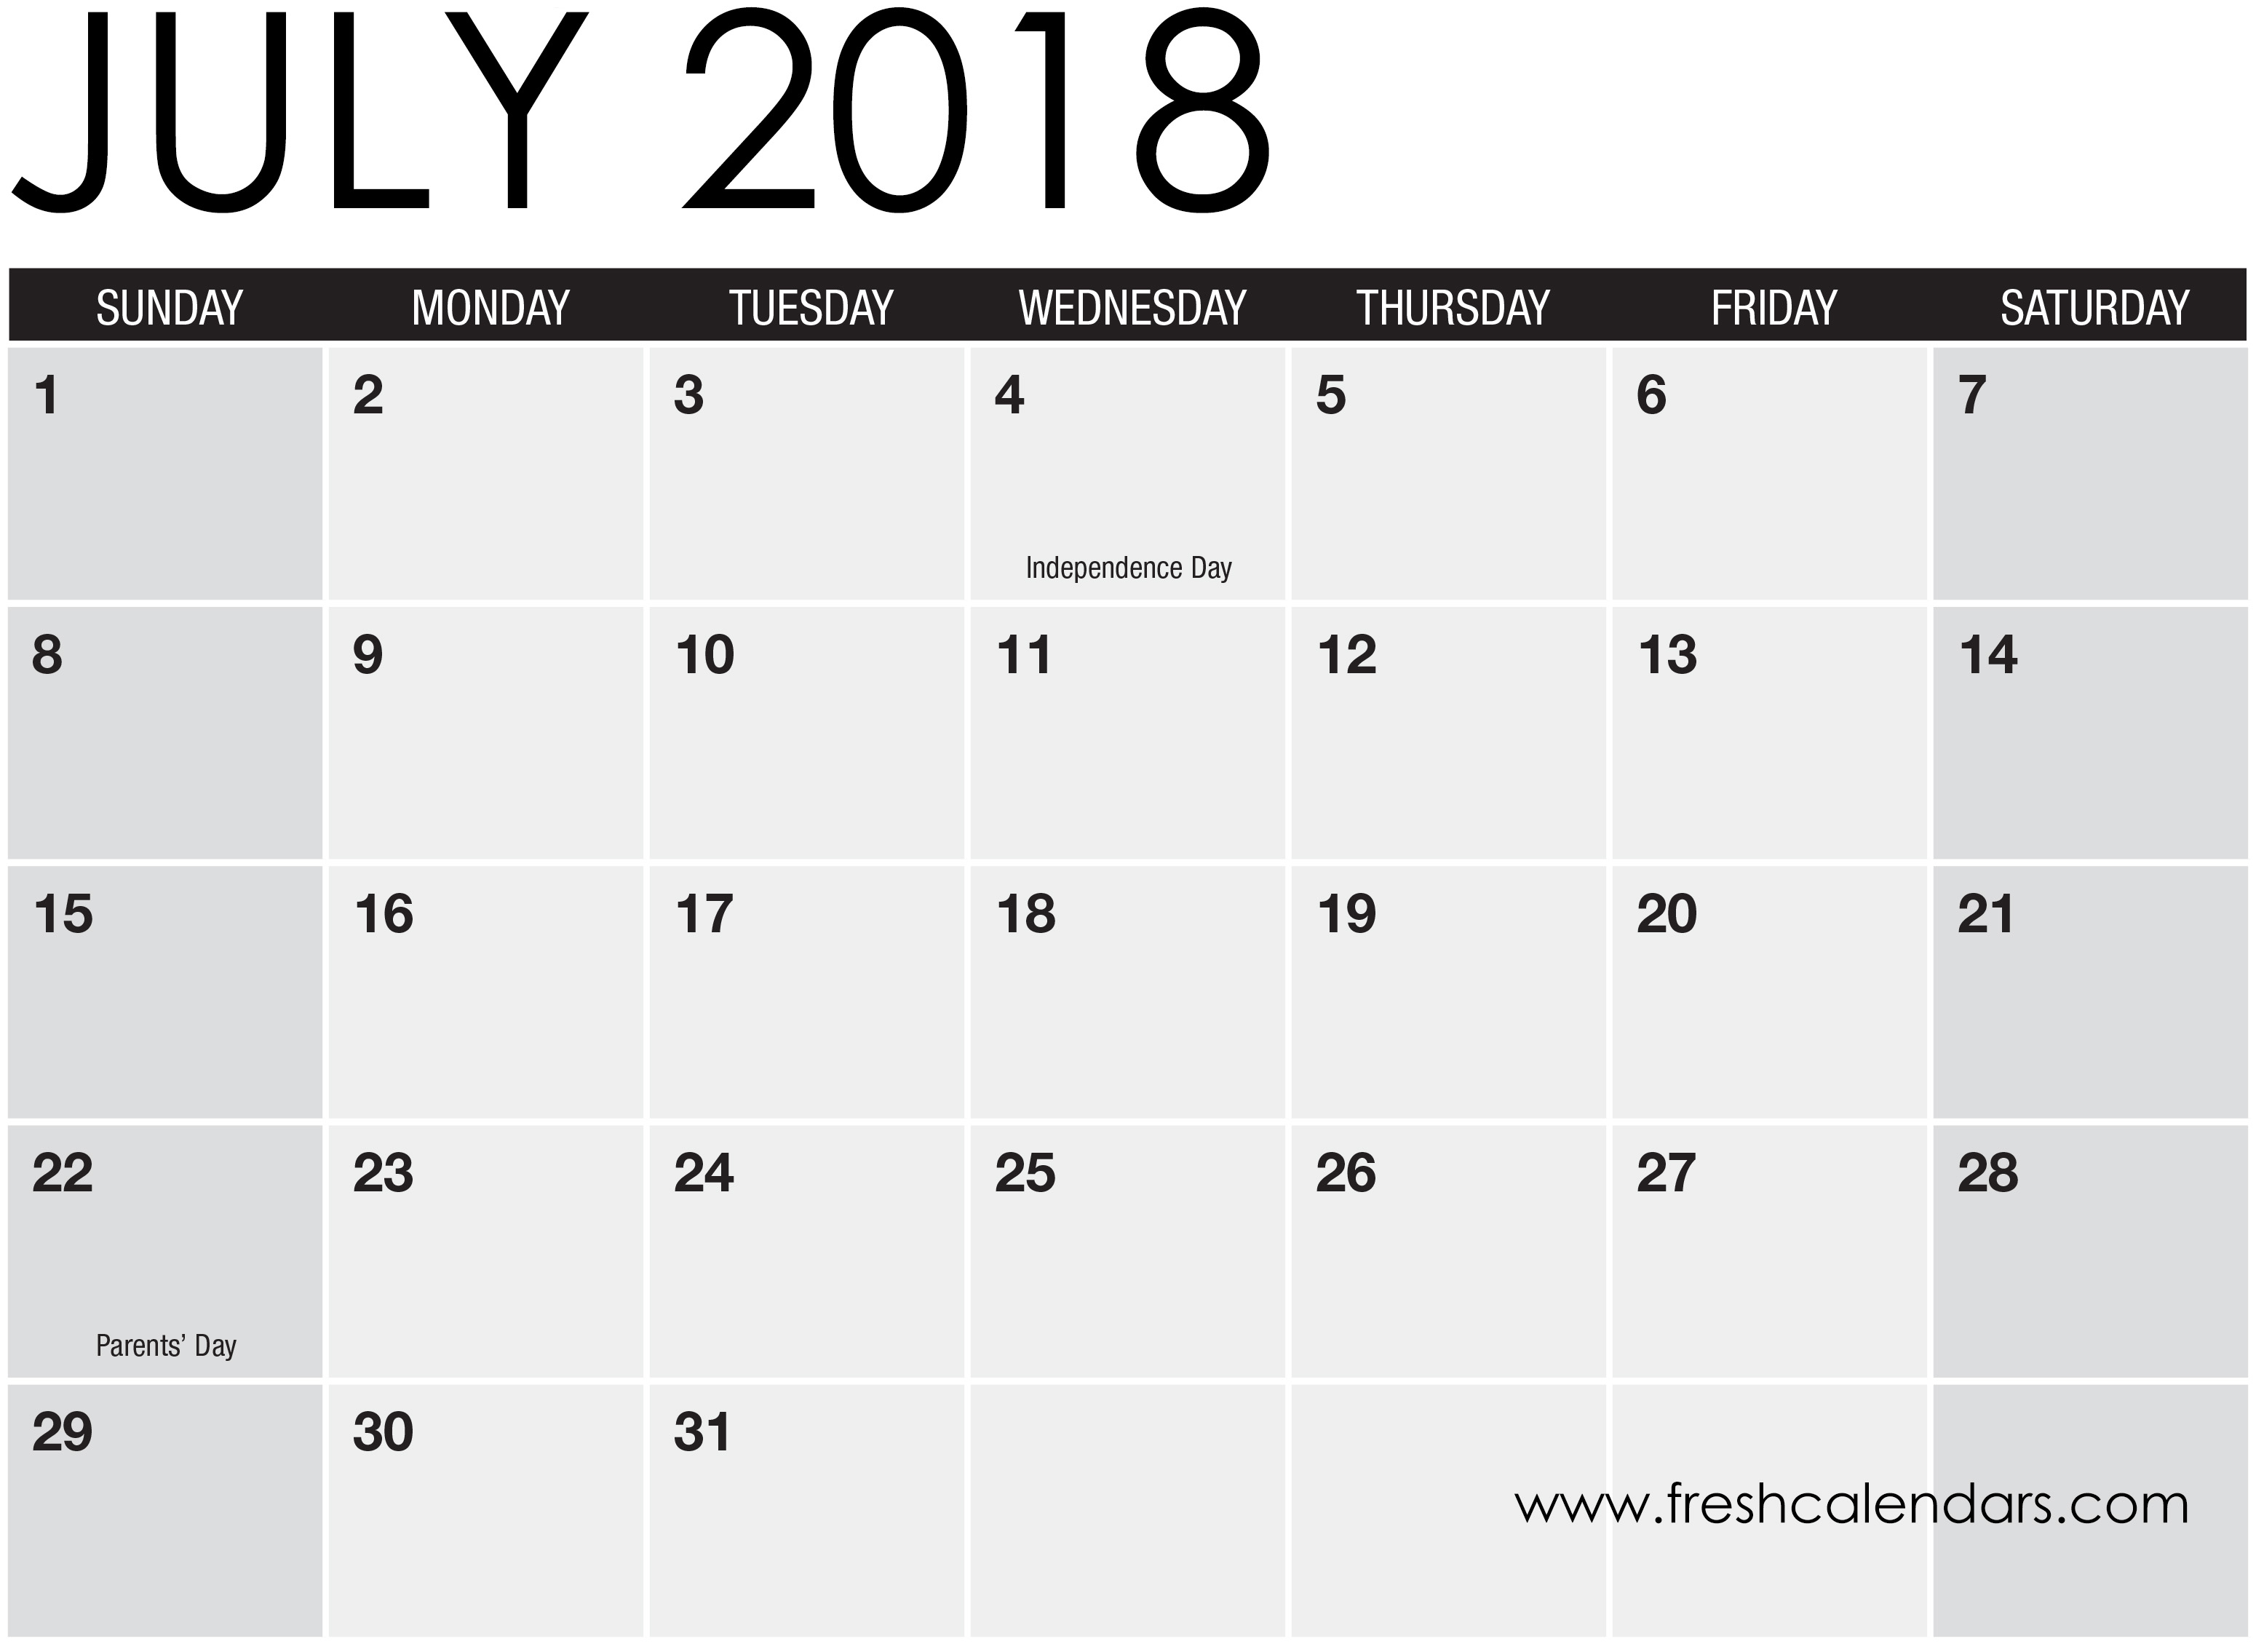 calendar-july-2018-uk-bank-holidays-excel-pdf-word-templates